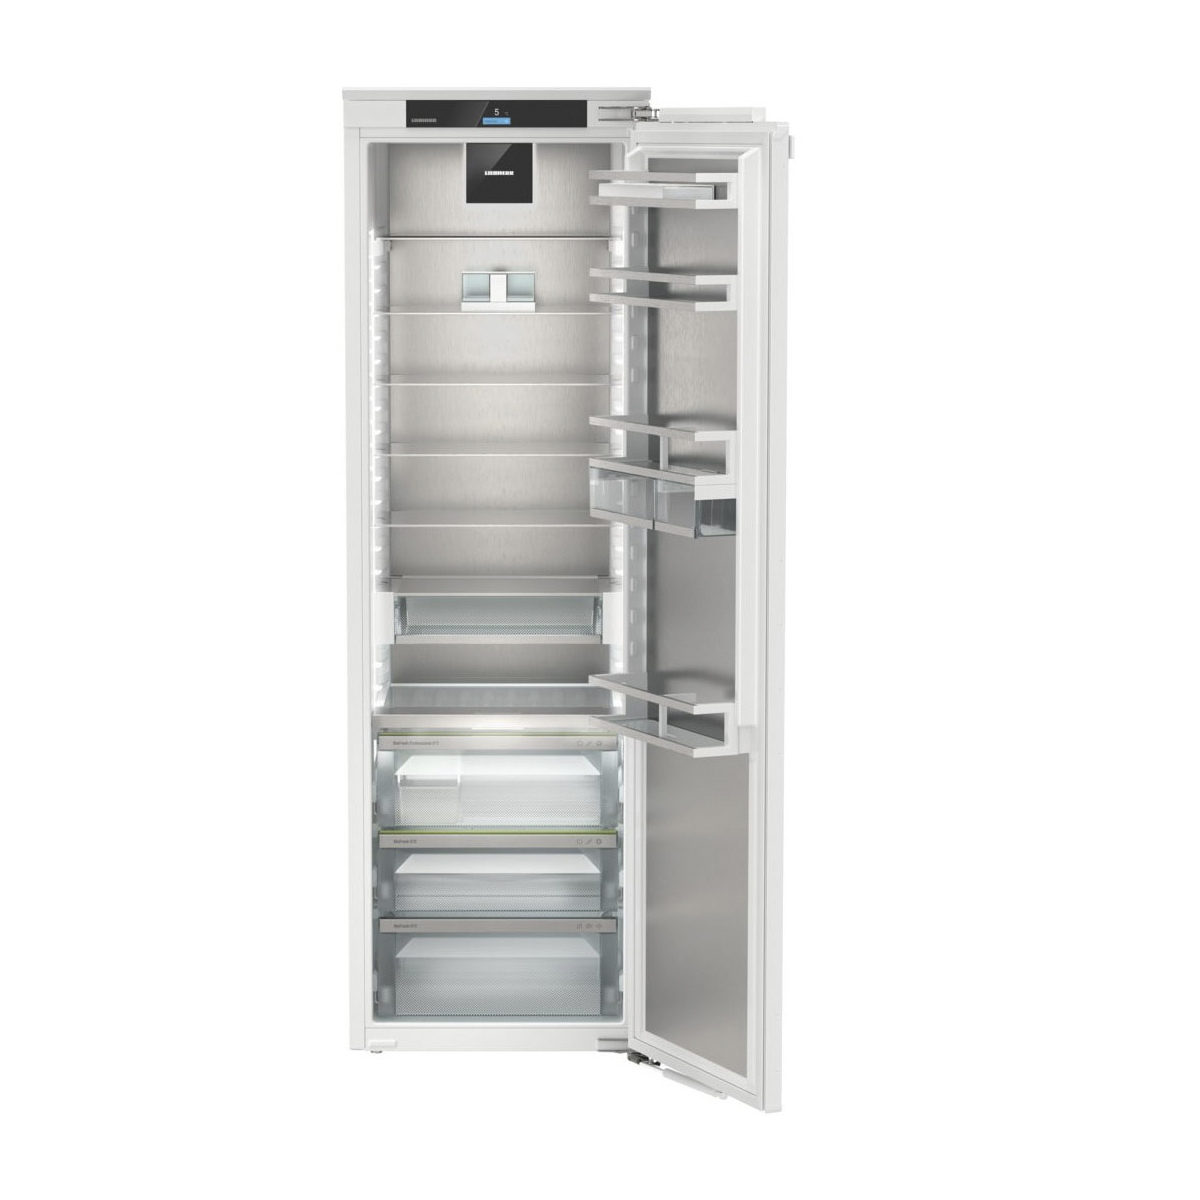 фото Встраиваемый холодильник liebherr irbd 5180-20 001 white